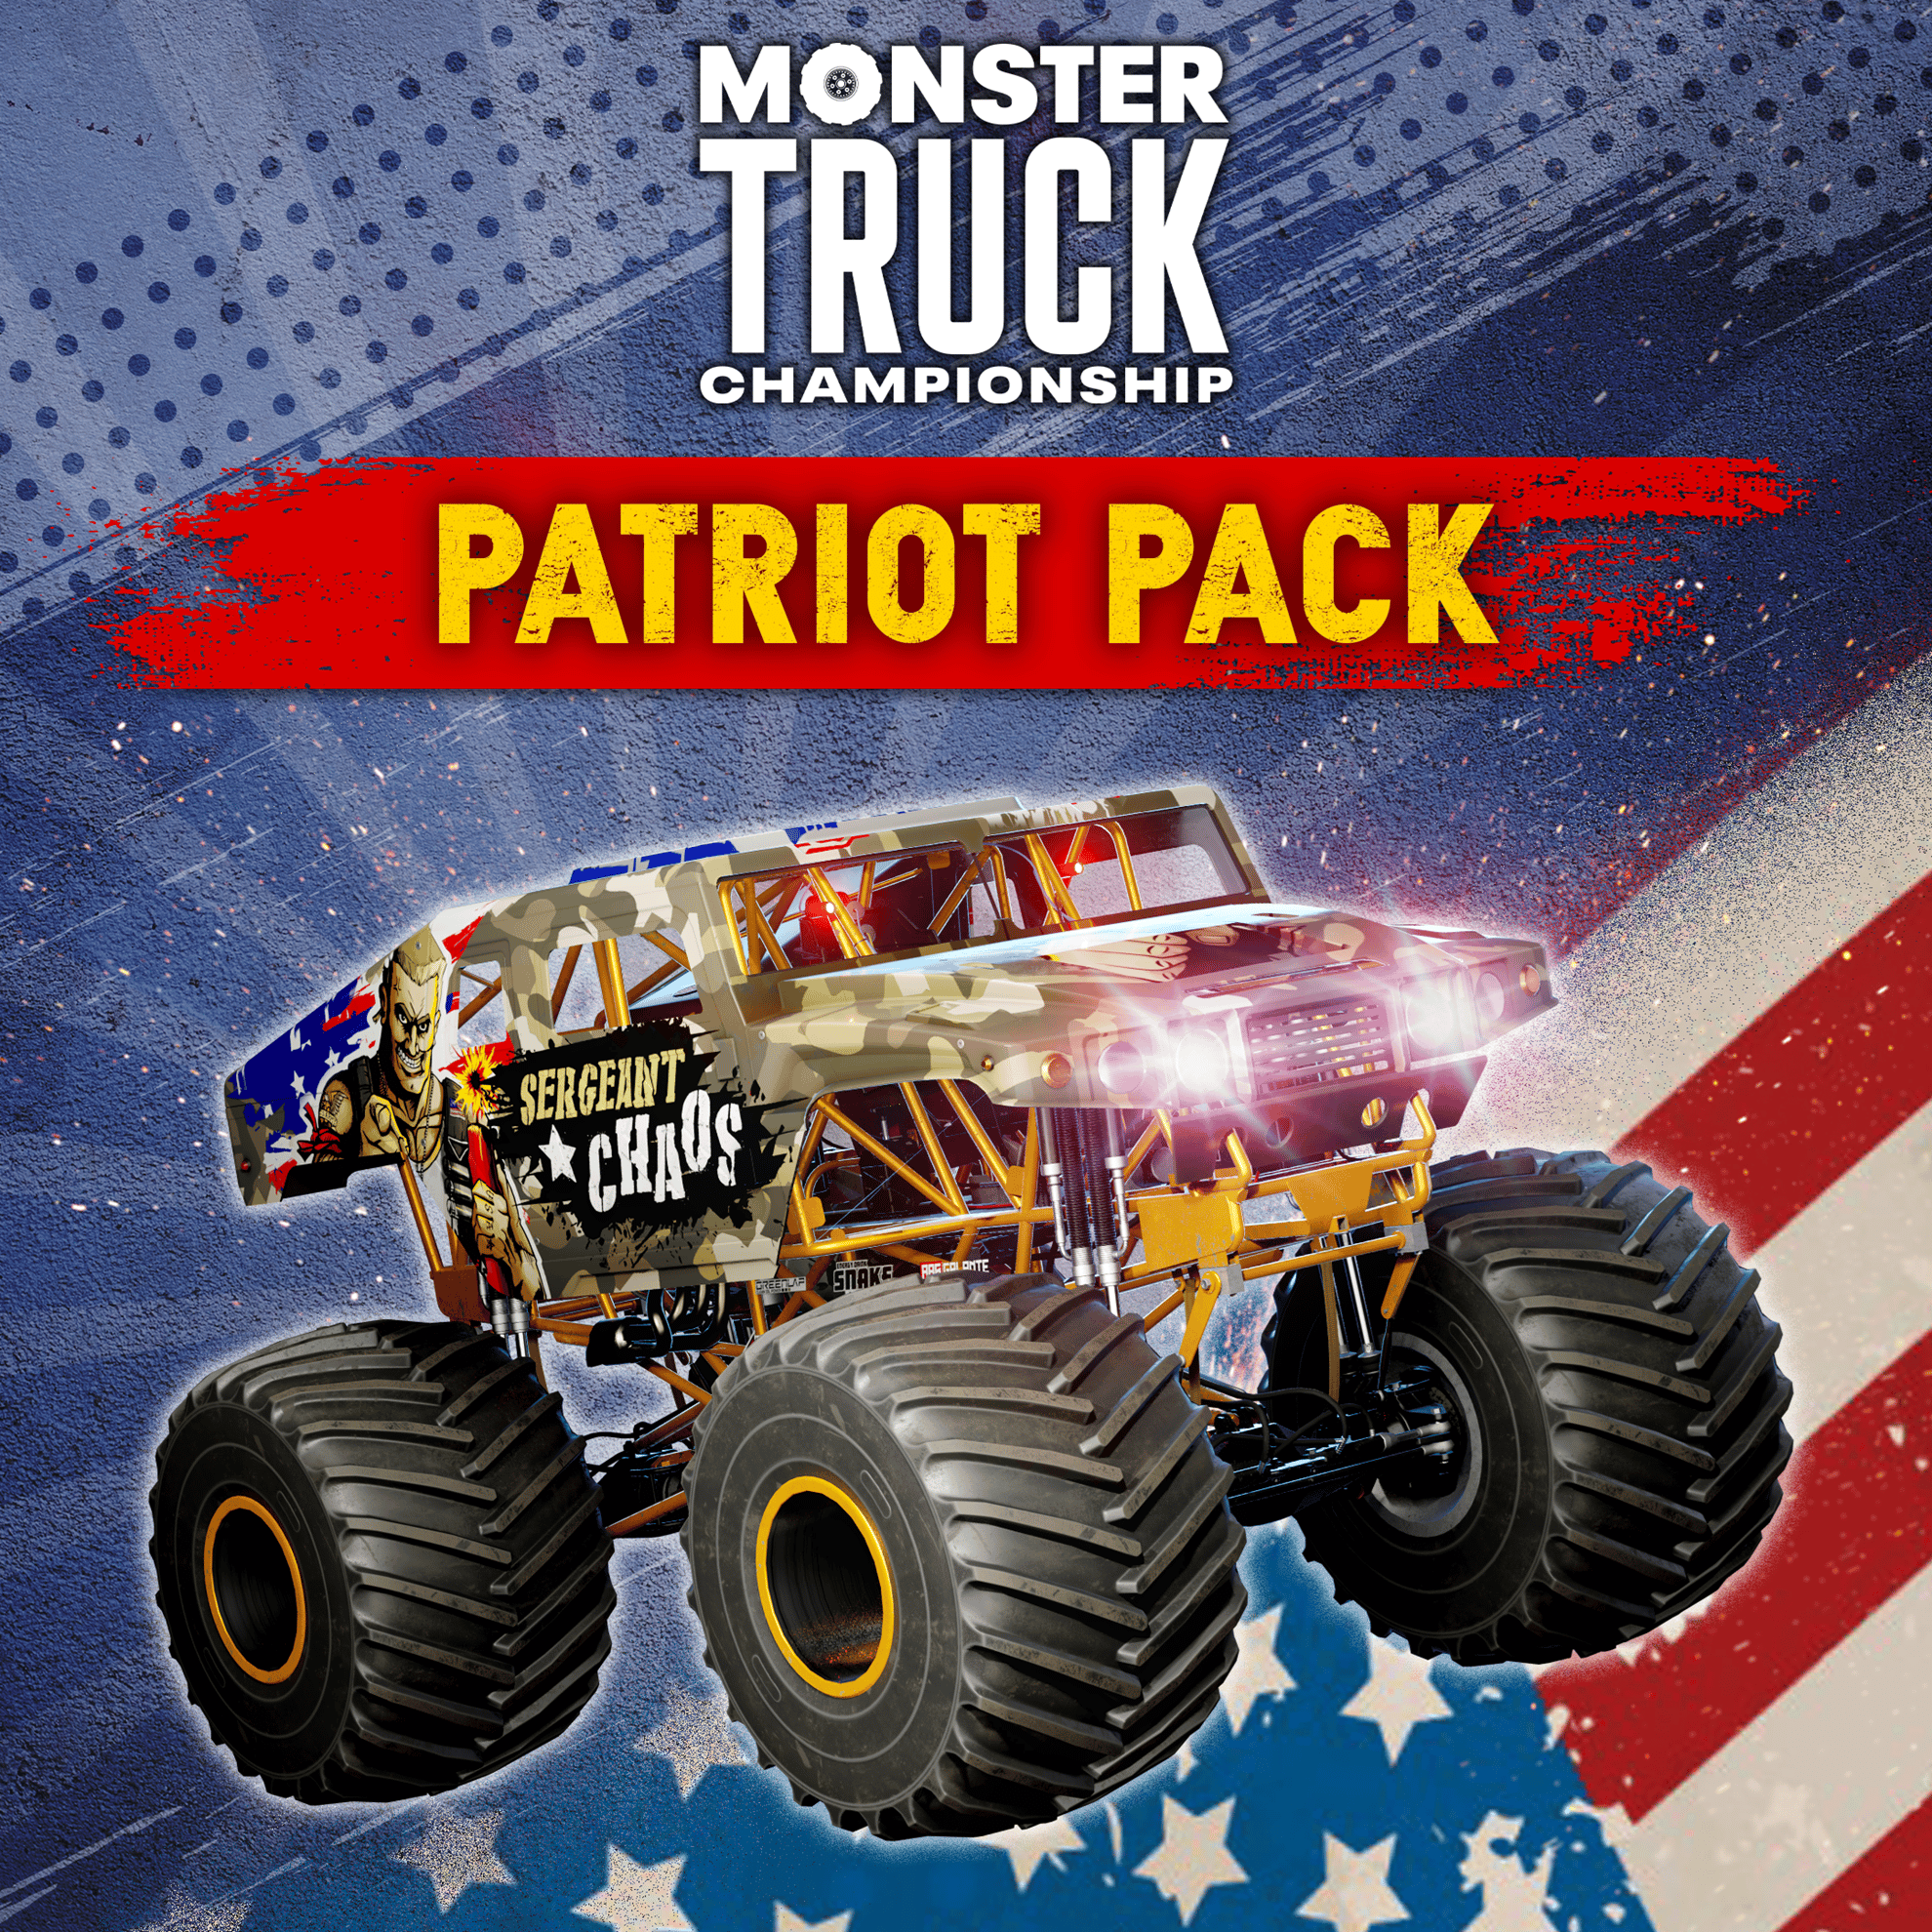 Monster Truck Championship Patriot Pack | WW (310bb4b5-90e3-4786-abf5-926c358b46d7)